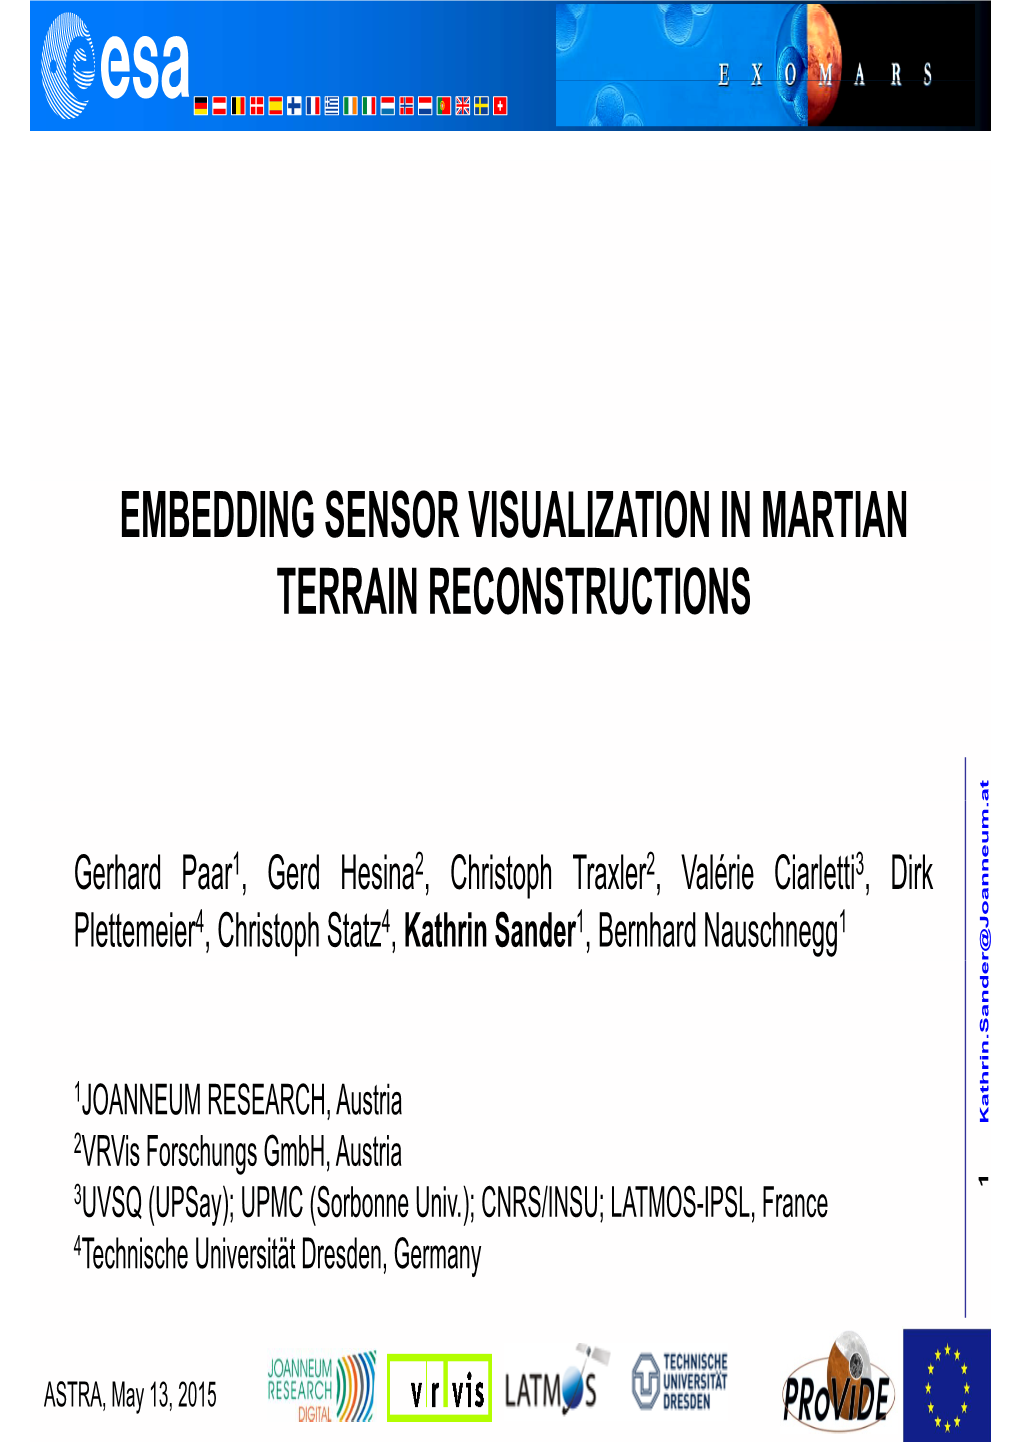 EMBEDDING SENSOR VISUALIZATION in MARTIAN TERRAIN RECONSTRUCTIONS At